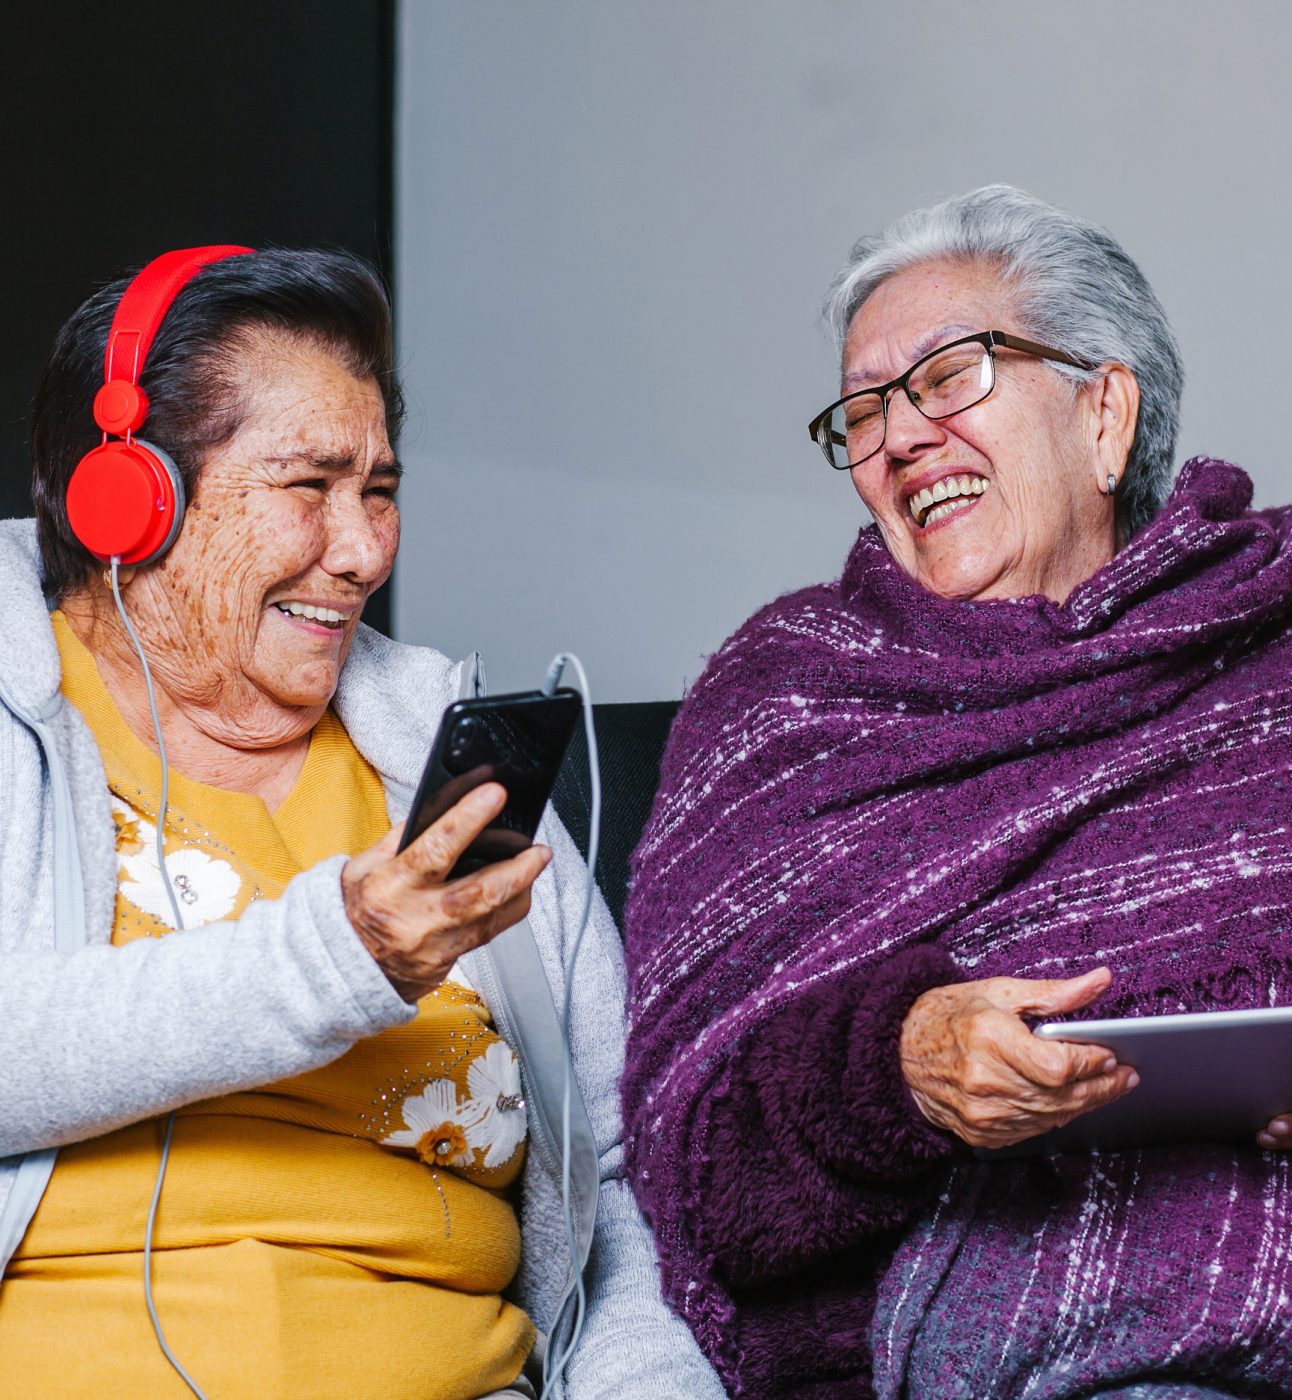 Older people in Latin America